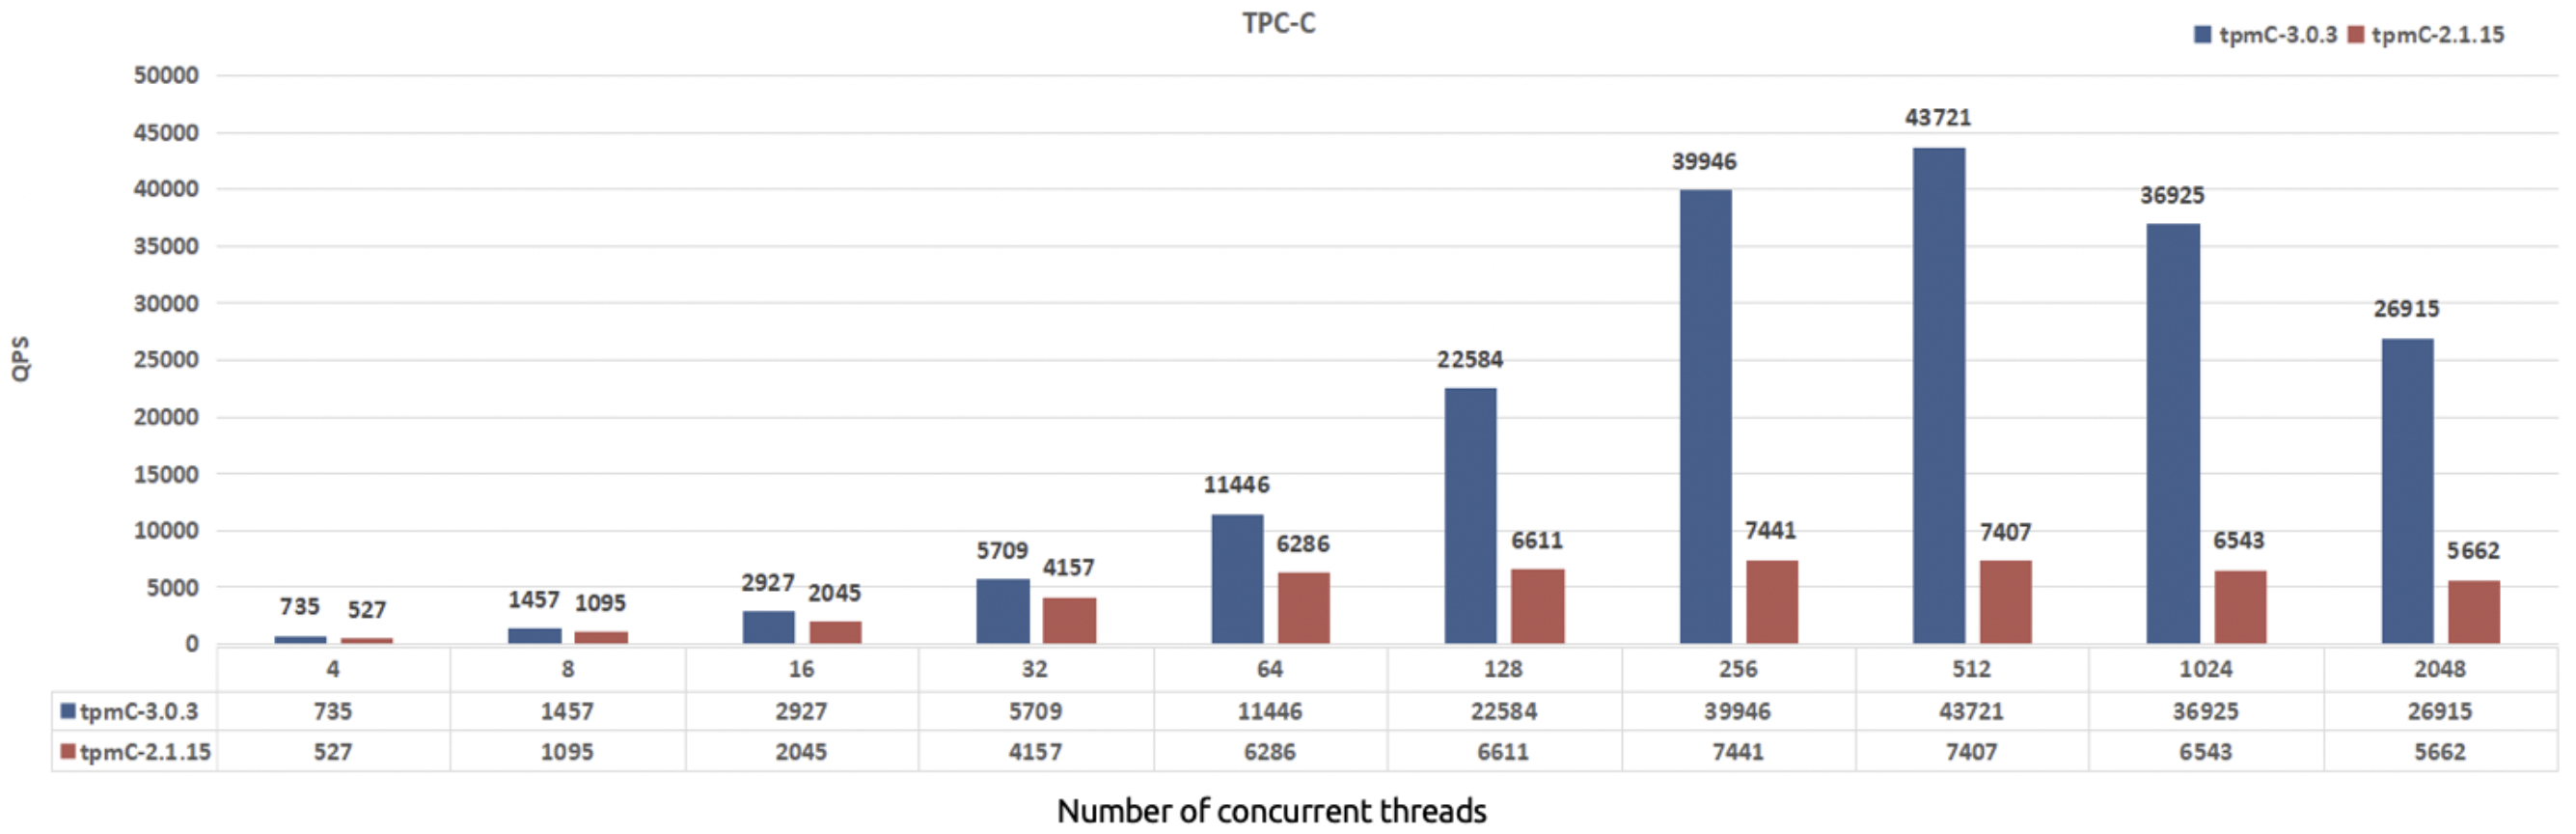 TPC-C performance comparison